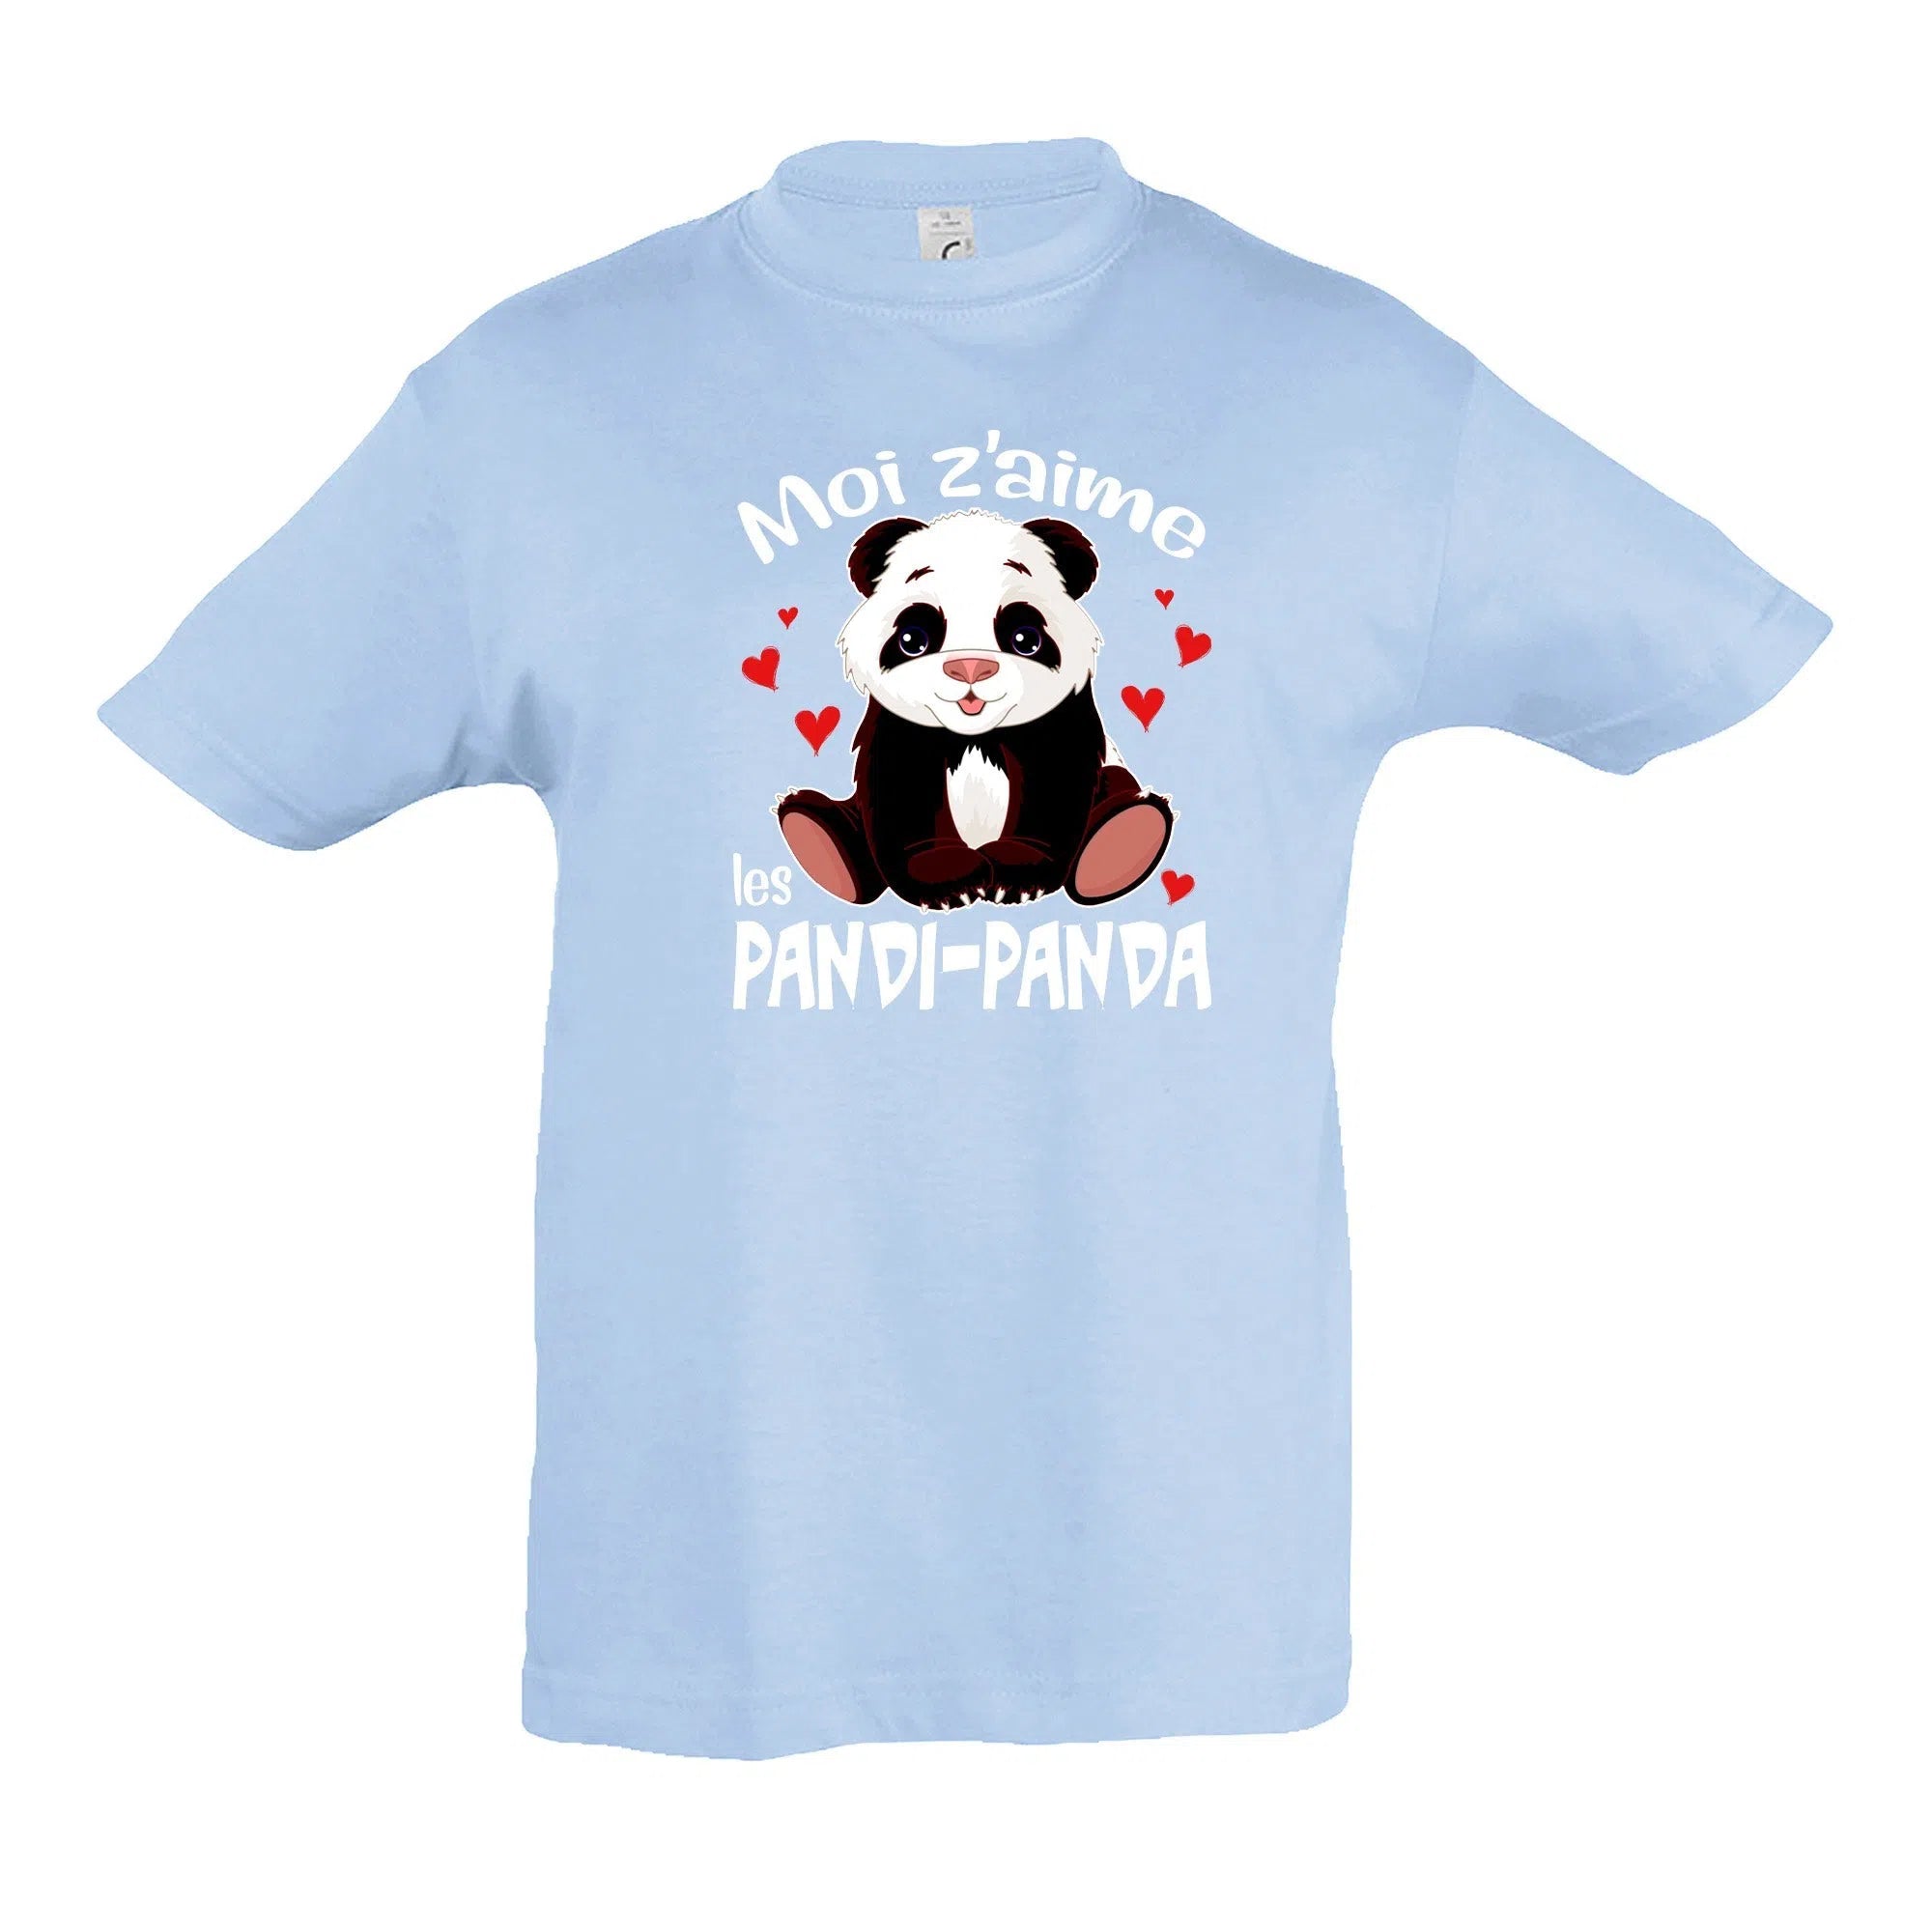 Moi z'aime les pandi-panda-Imagesdartistes